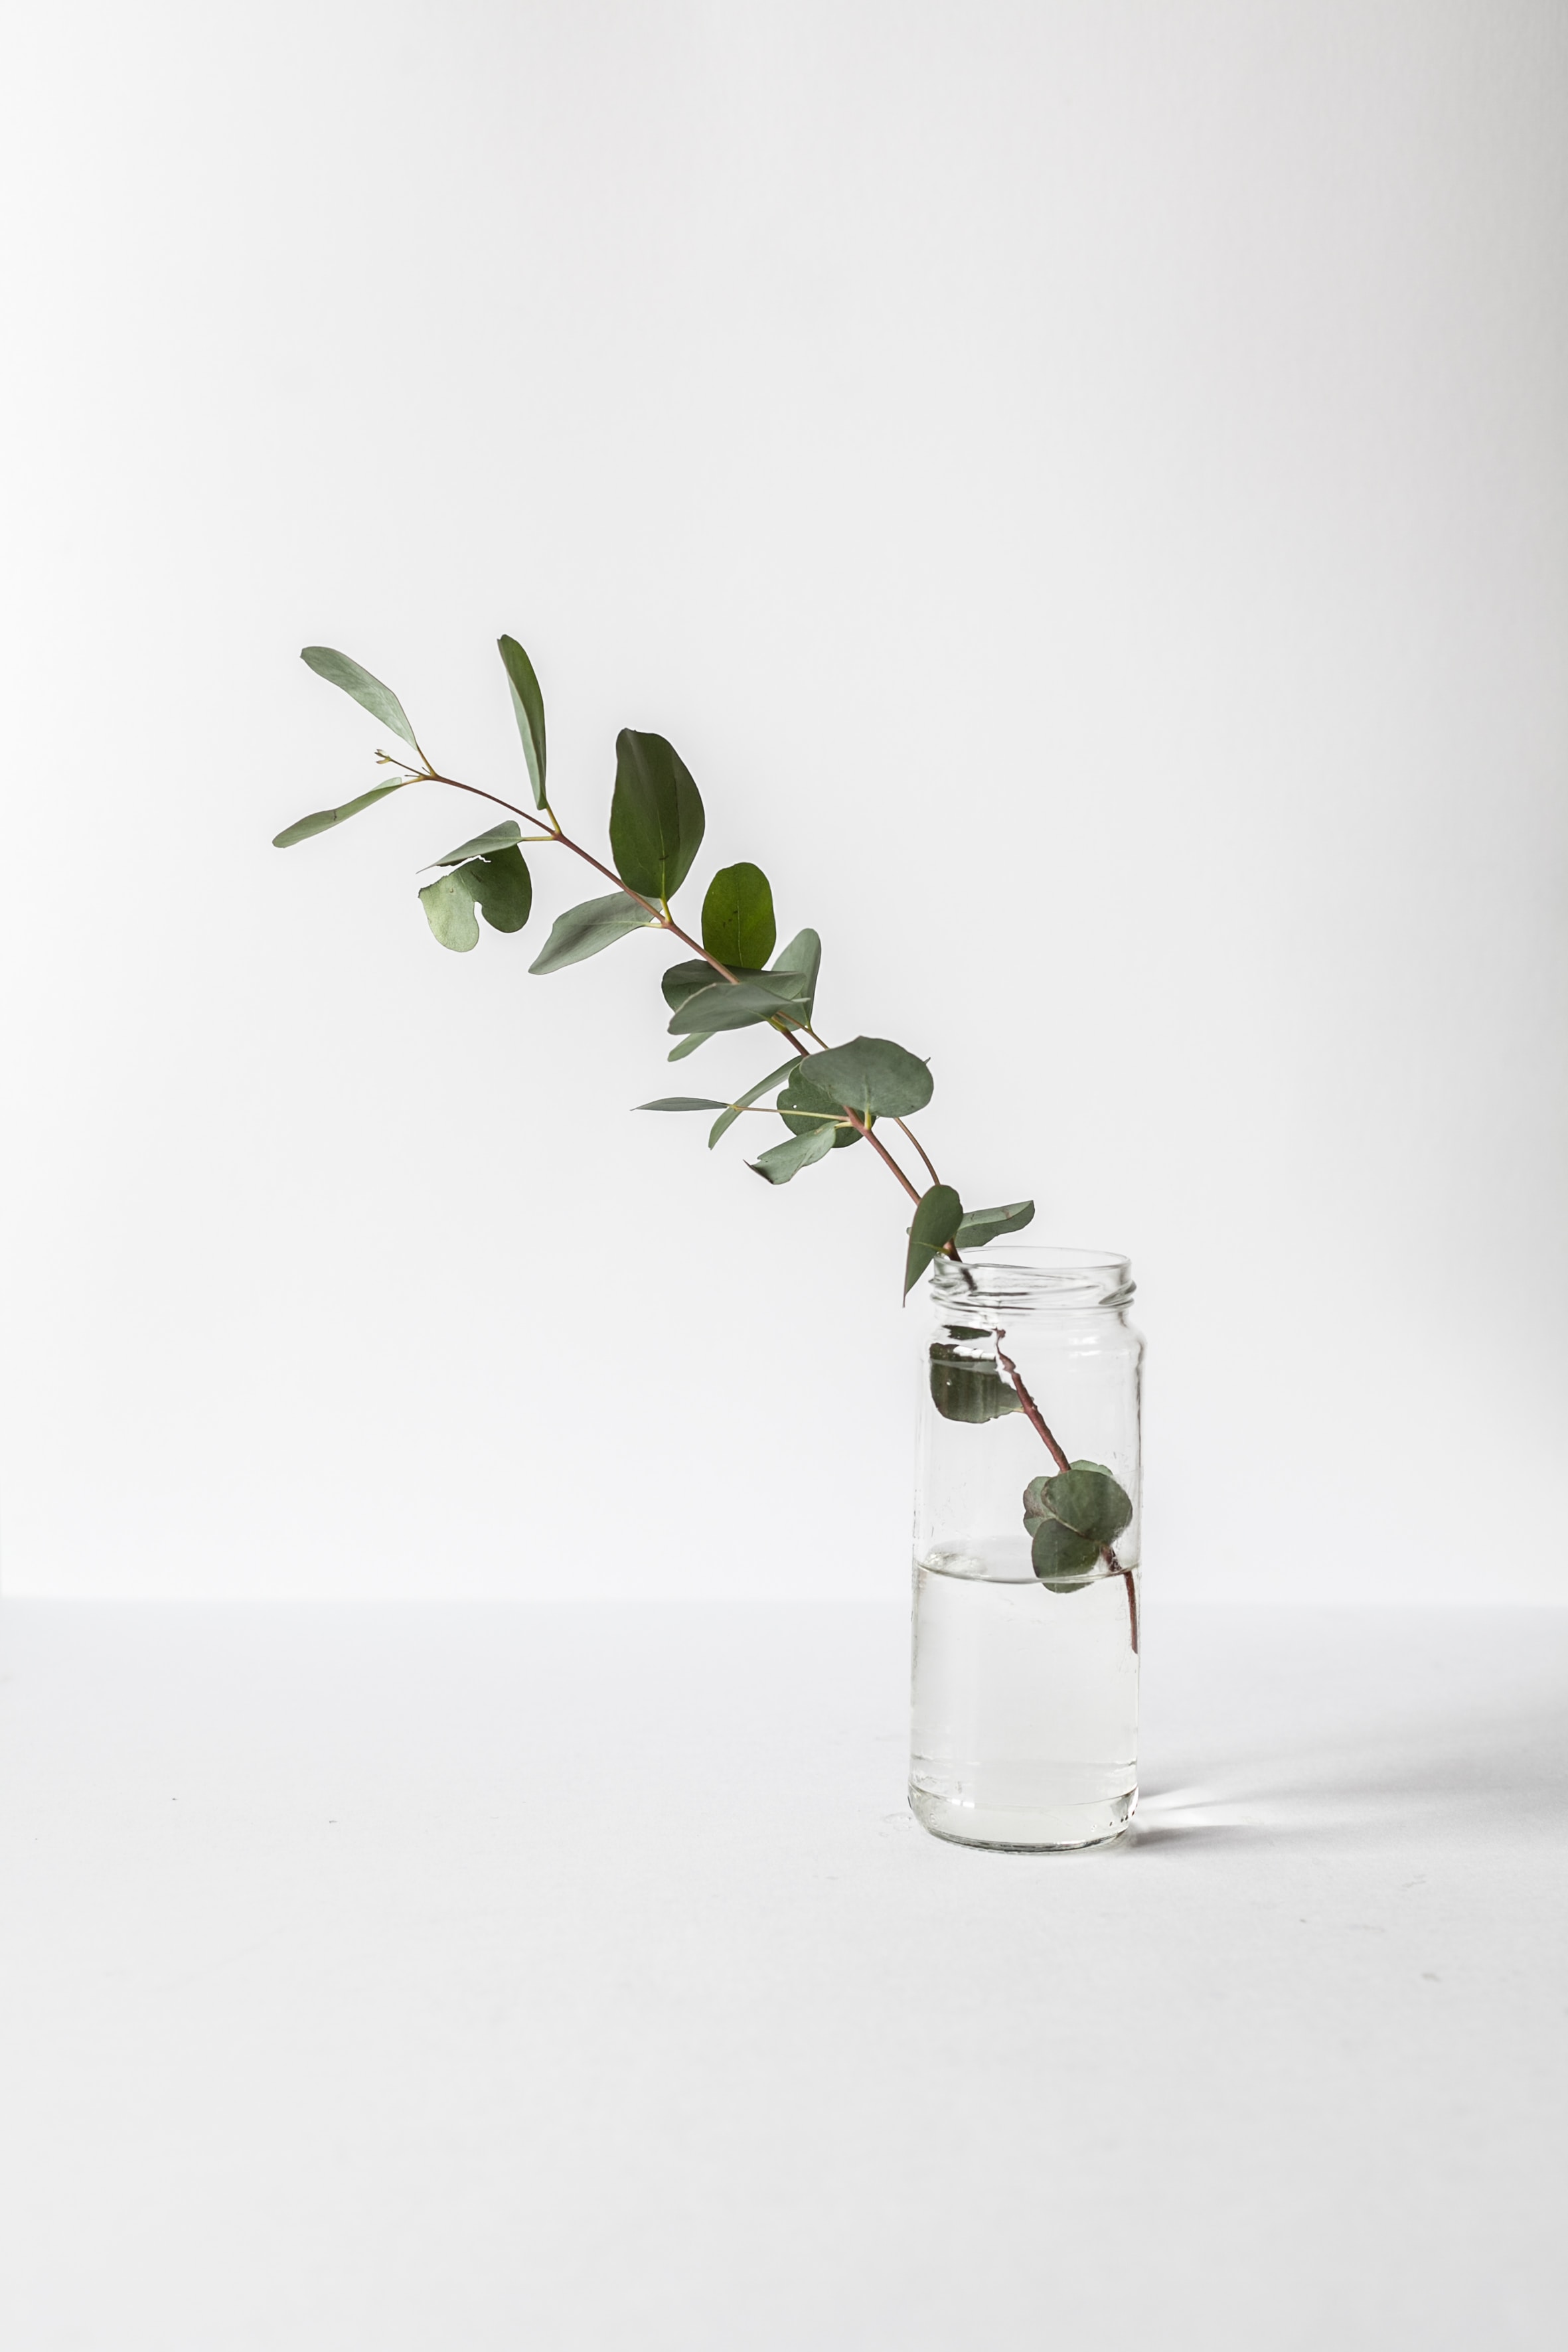 Green Leafed Plant In Glass Jar - Wallpaperforu